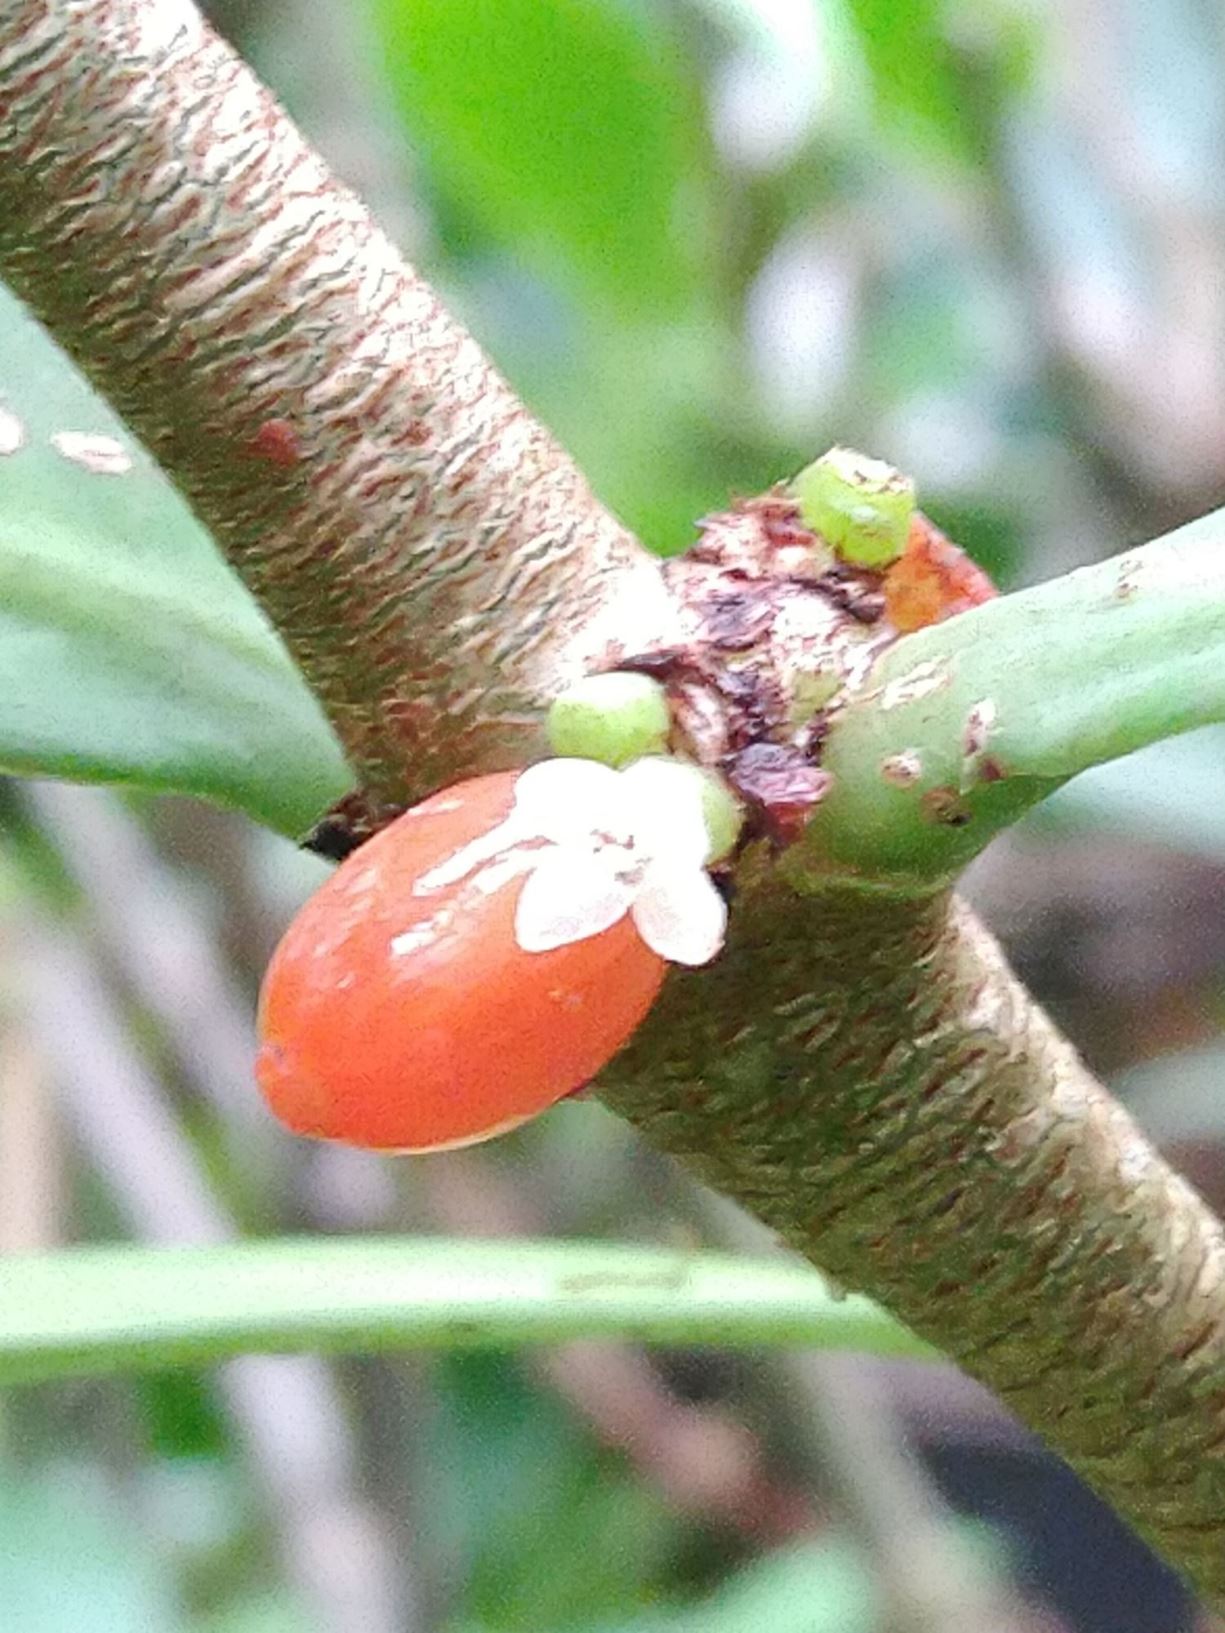 Hydnophytum formicarum - Ant plant, Mierenplant